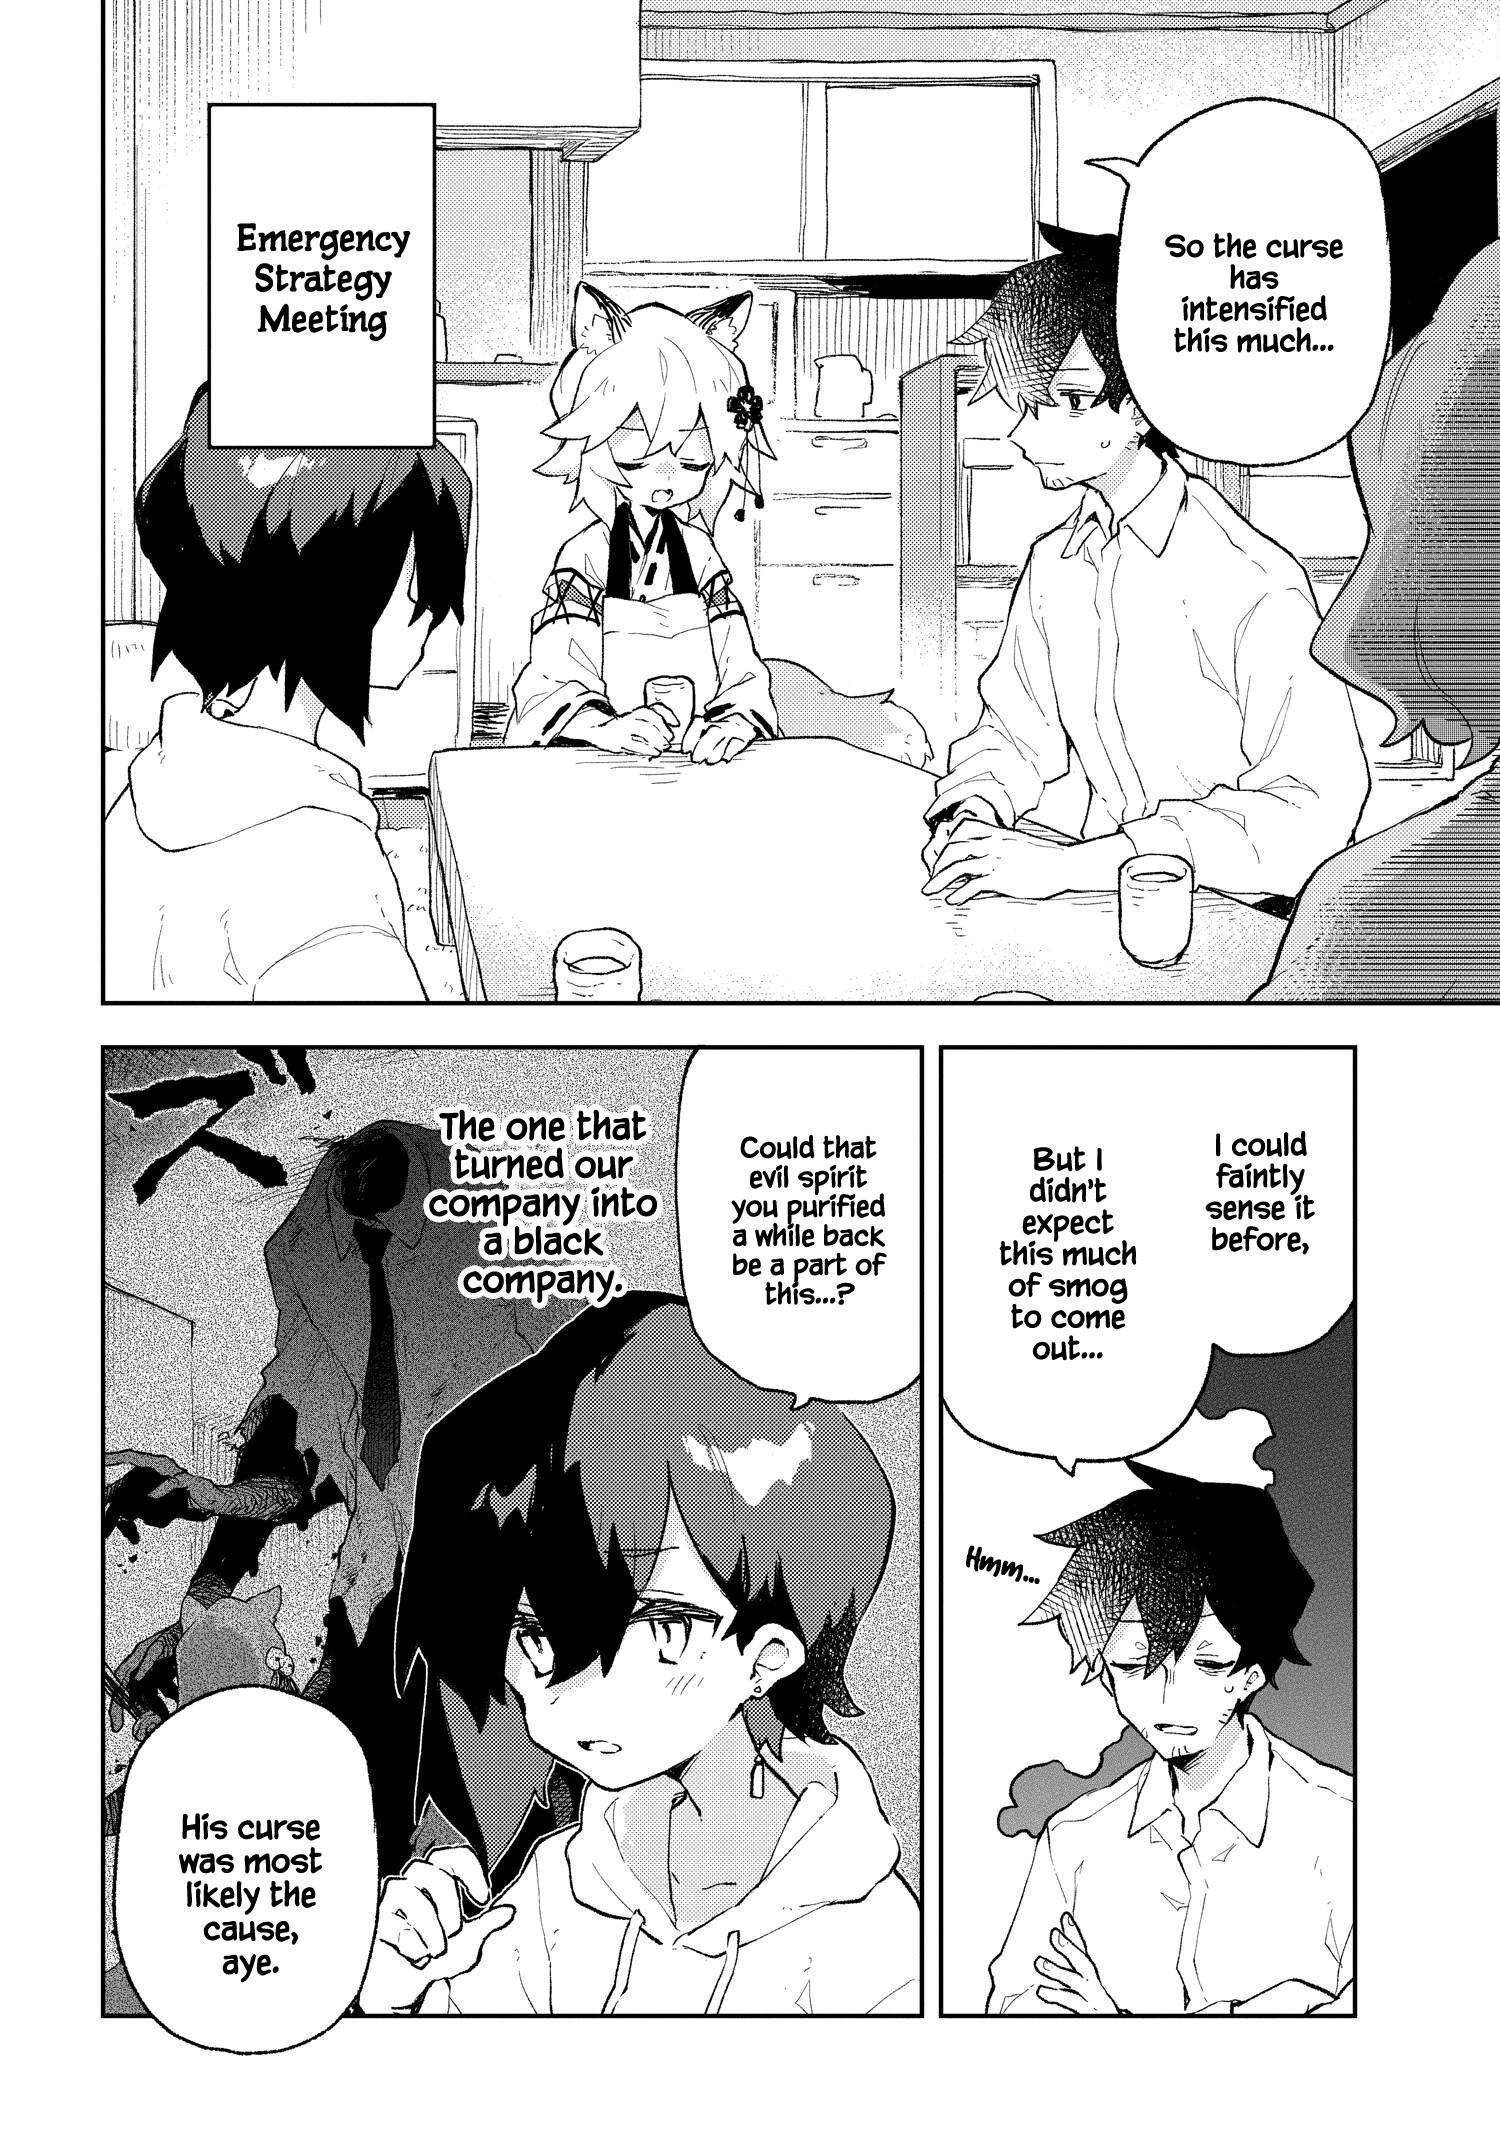 Sewayaki Kitsune No Senko-San Vol.11 Chapter 83 page 4 - Mangakakalot